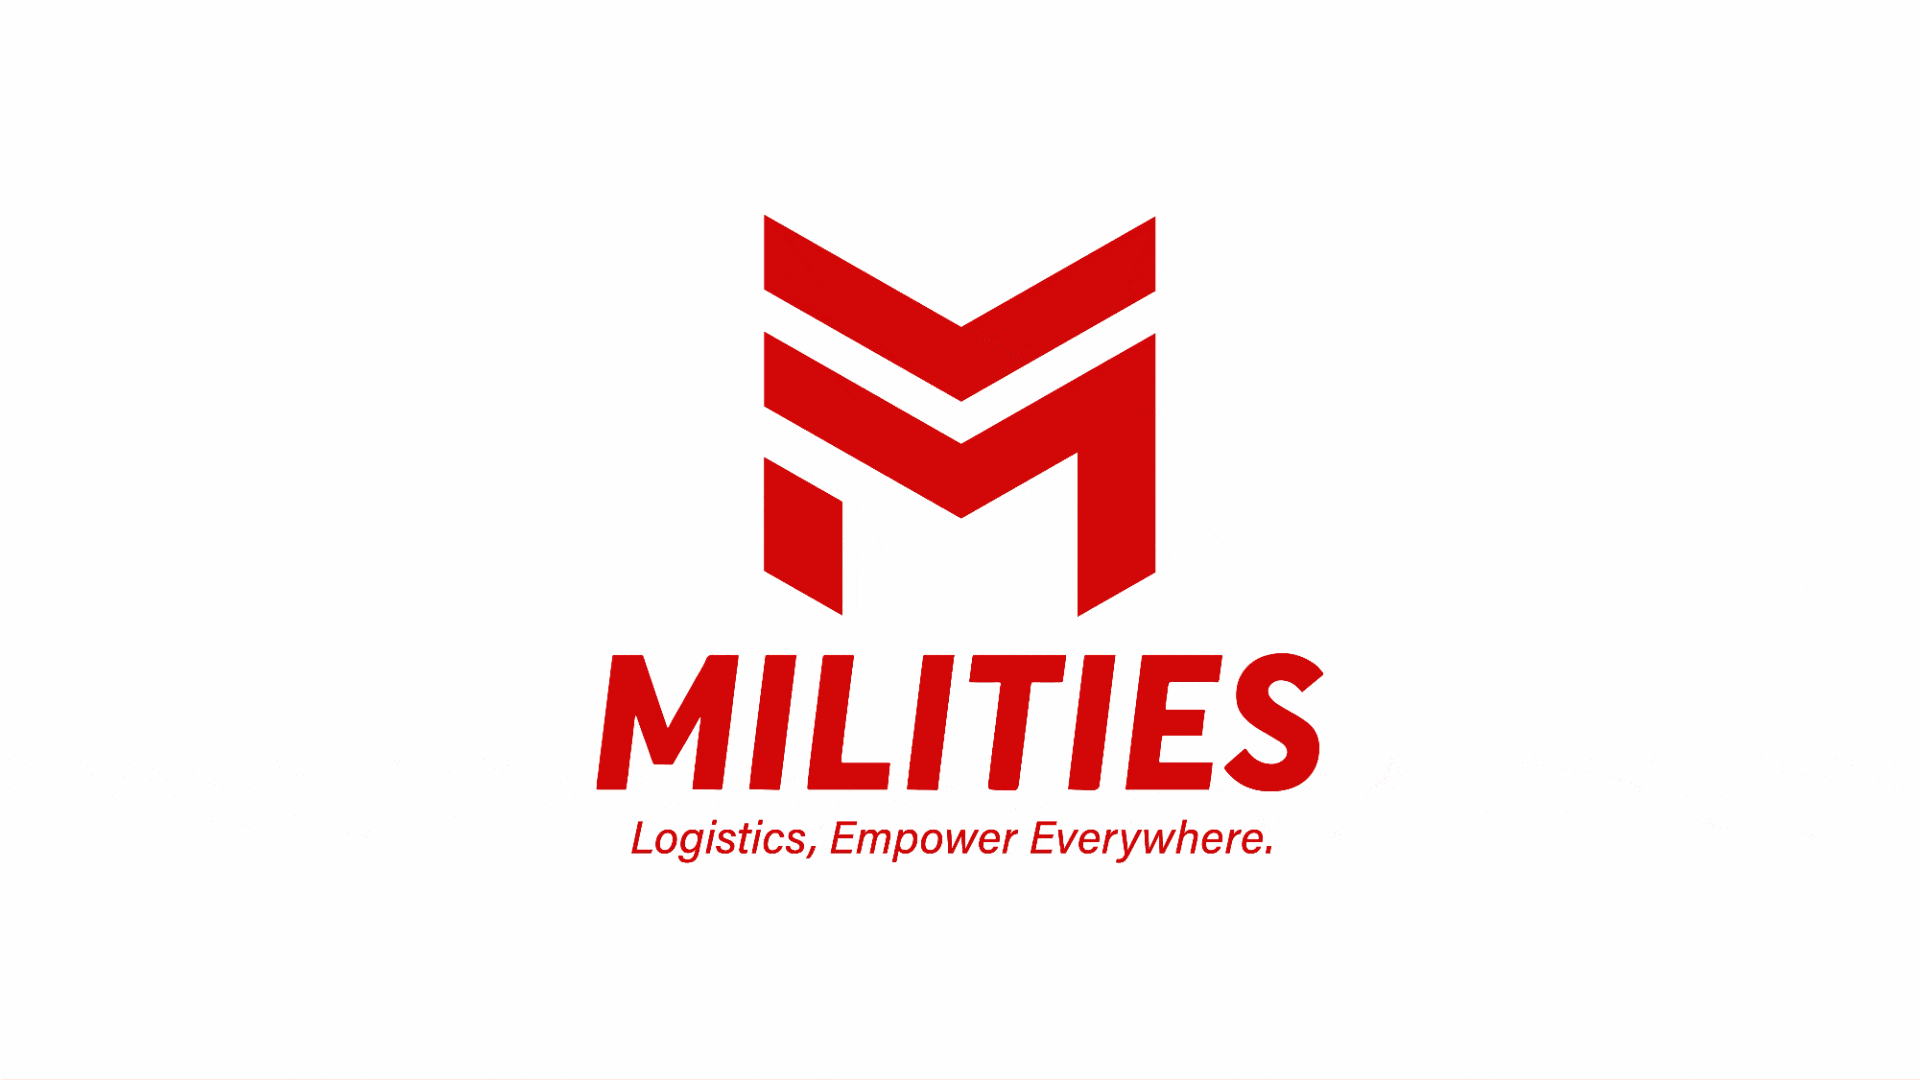 Gif format of Milities Distinctive Logo Design